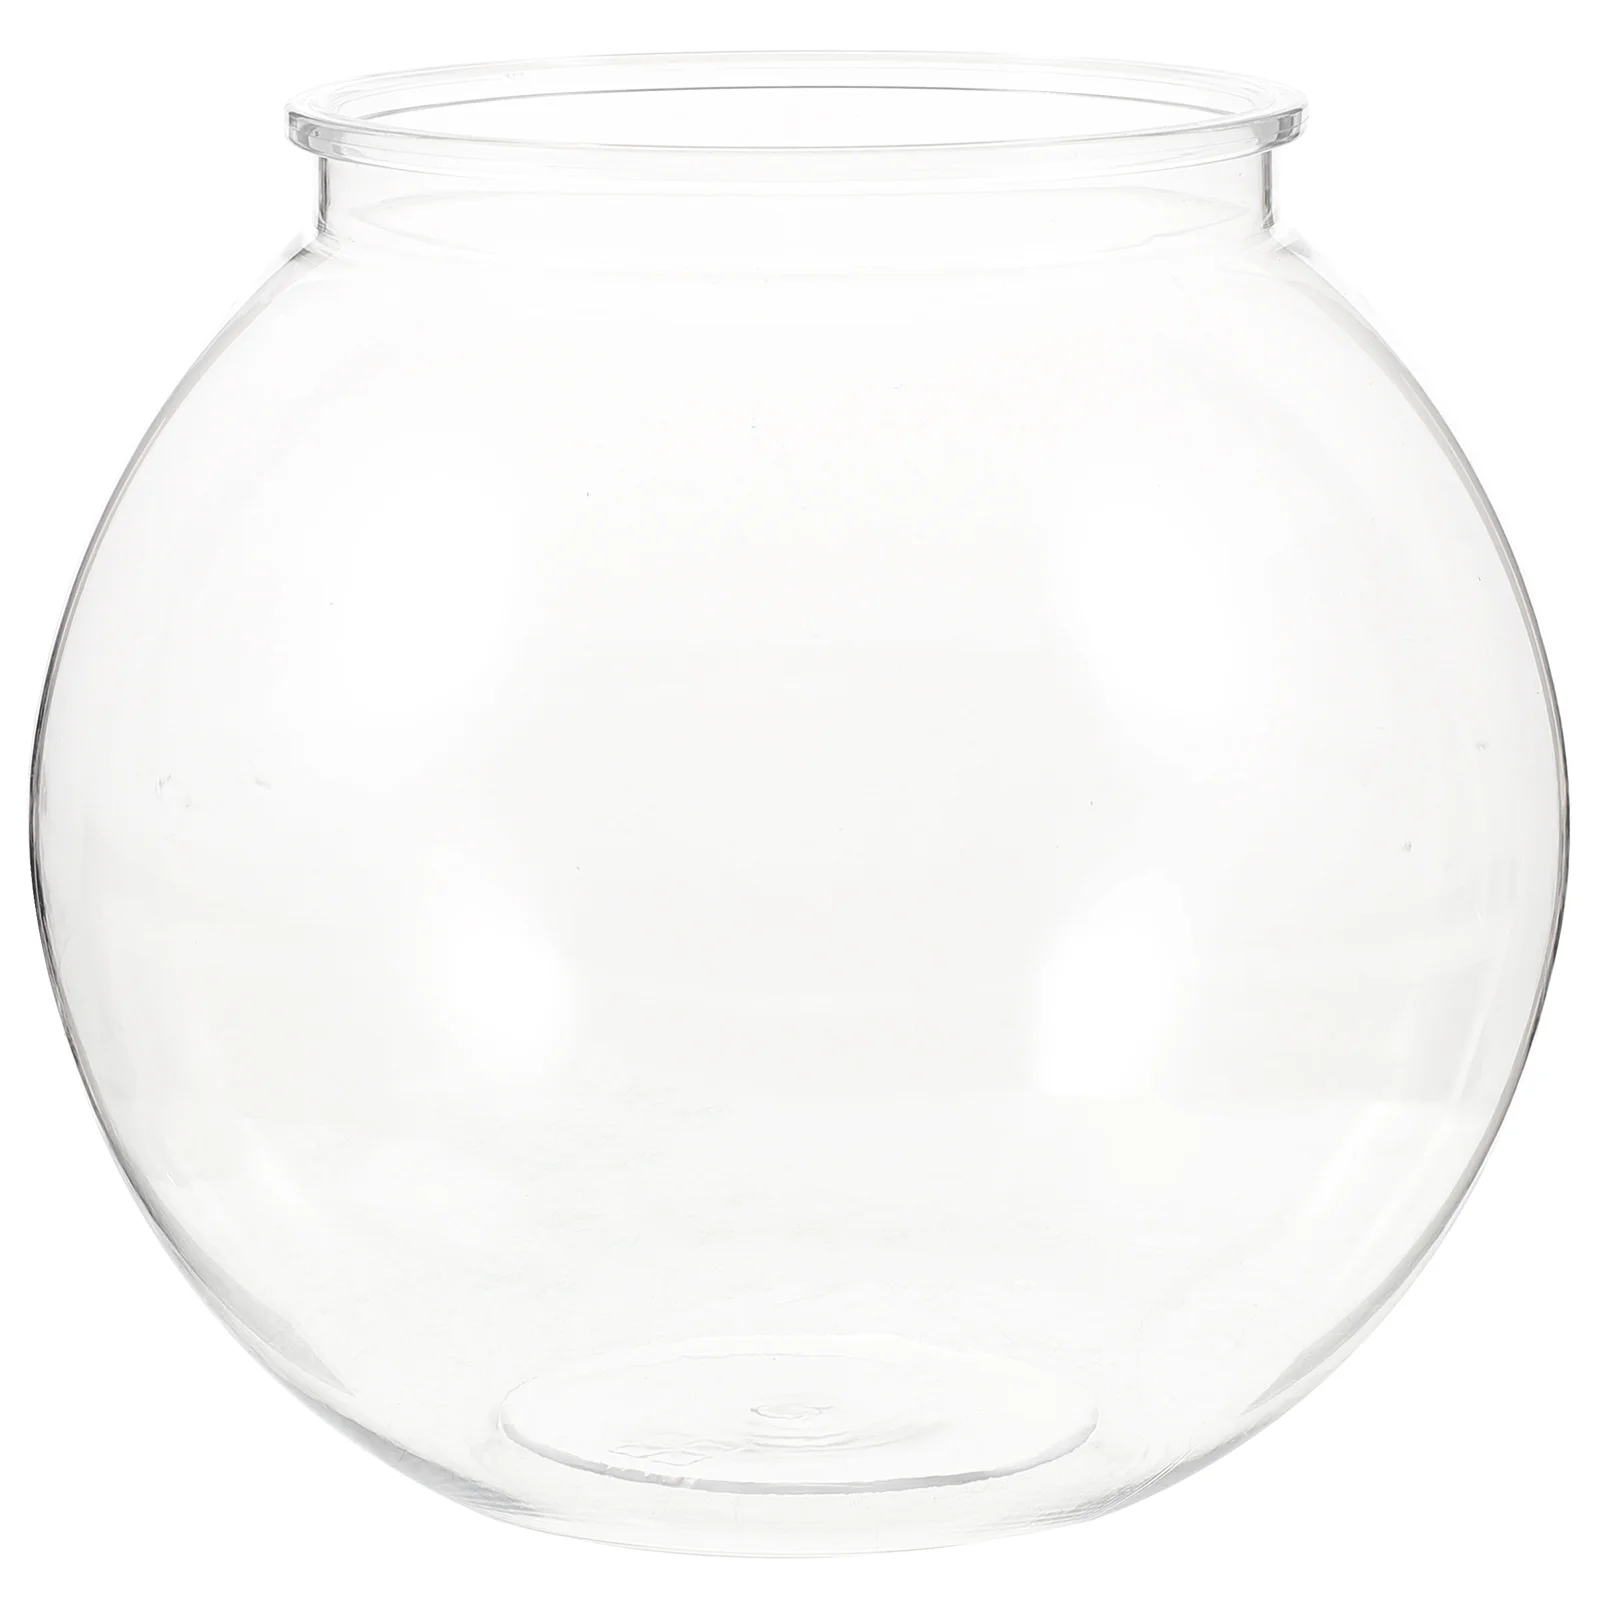 

Bowl Tank Aquarium Bowls Goldfish Betta Gallon Vase Candy Terrarium Globe Desktop Holder Round Vases Flower Mini Fishbowl Clear